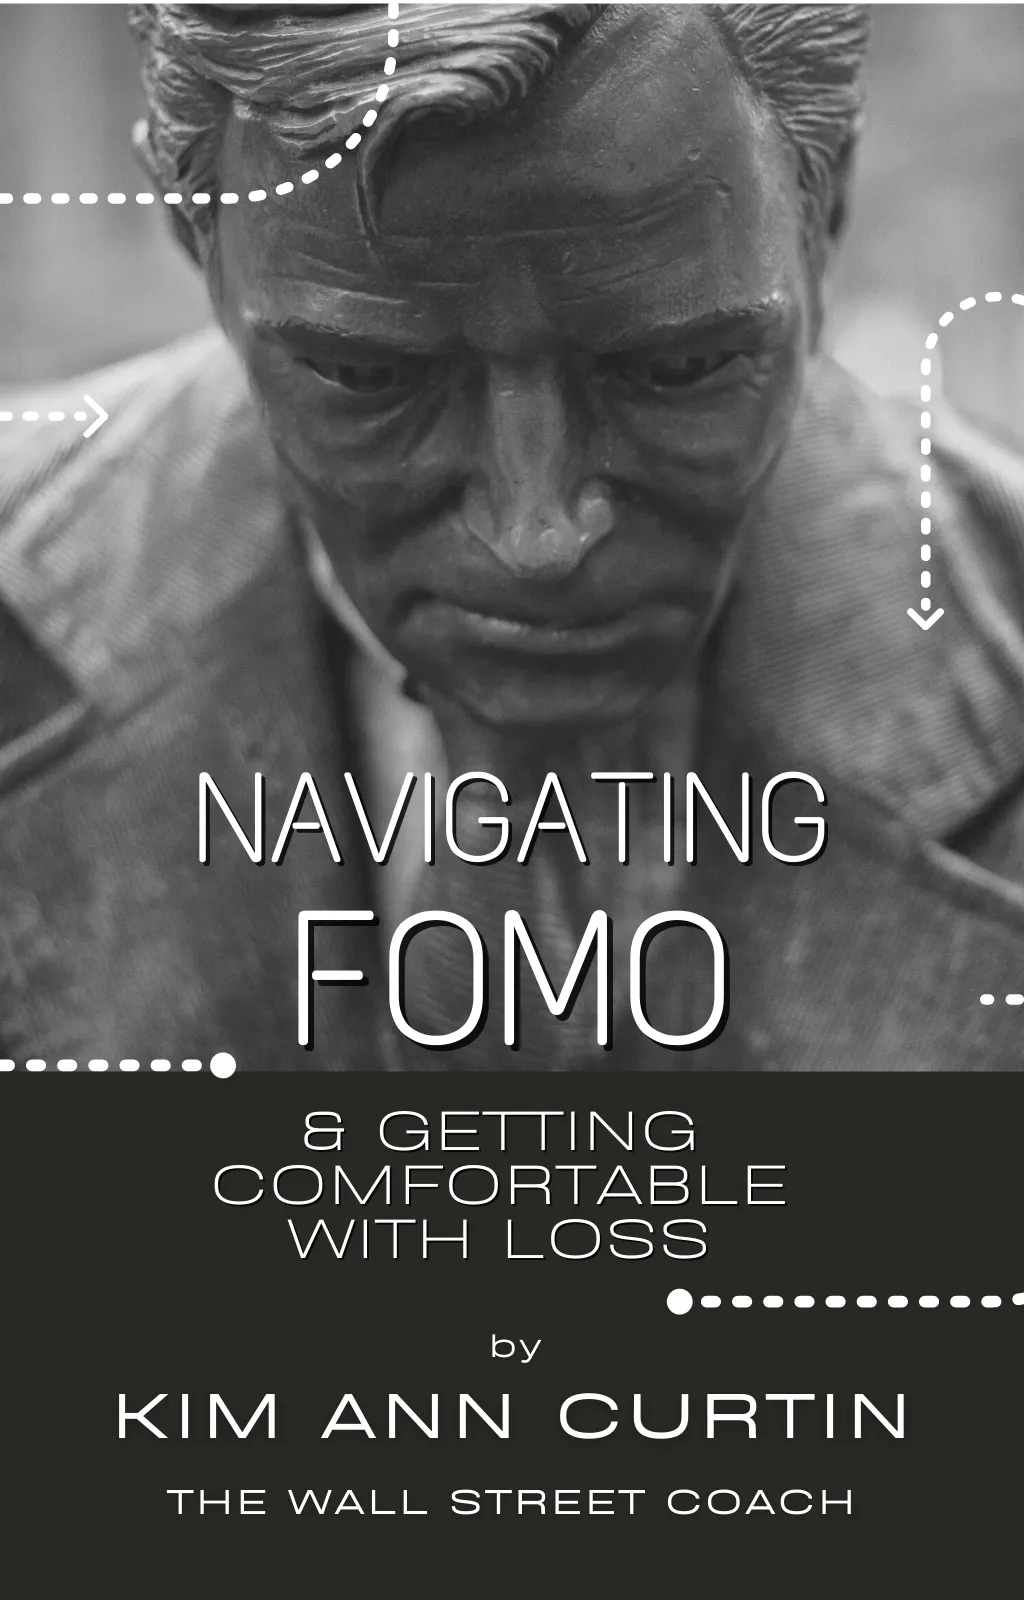 Navigating FOMO and Comfort With Loss